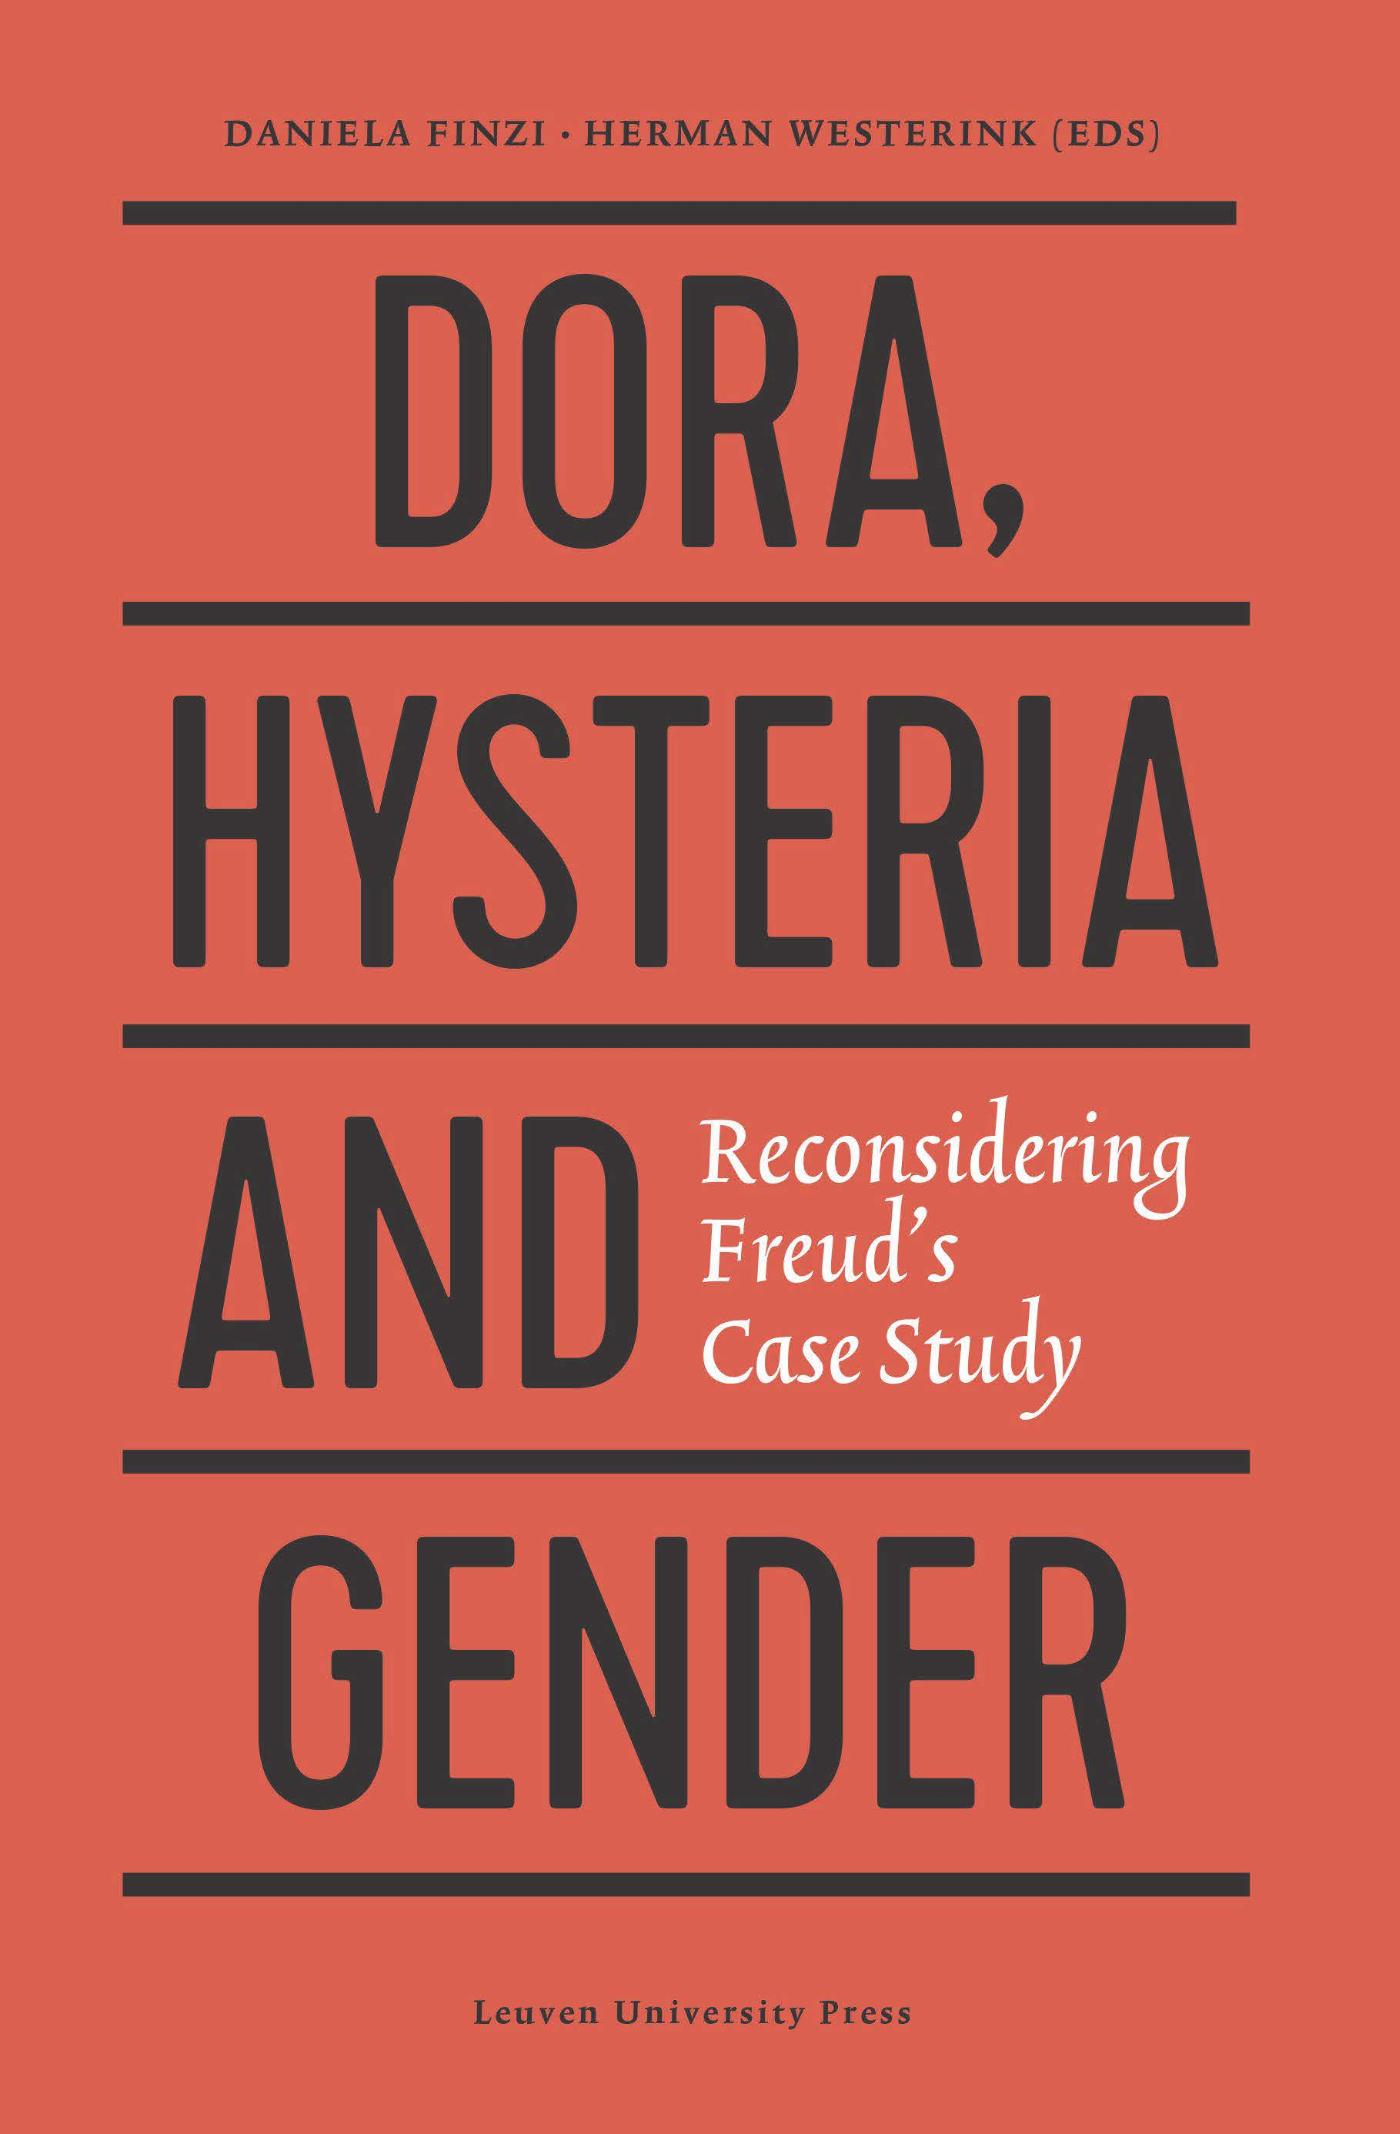 Dora, Hysteria and Gender (Ebook)